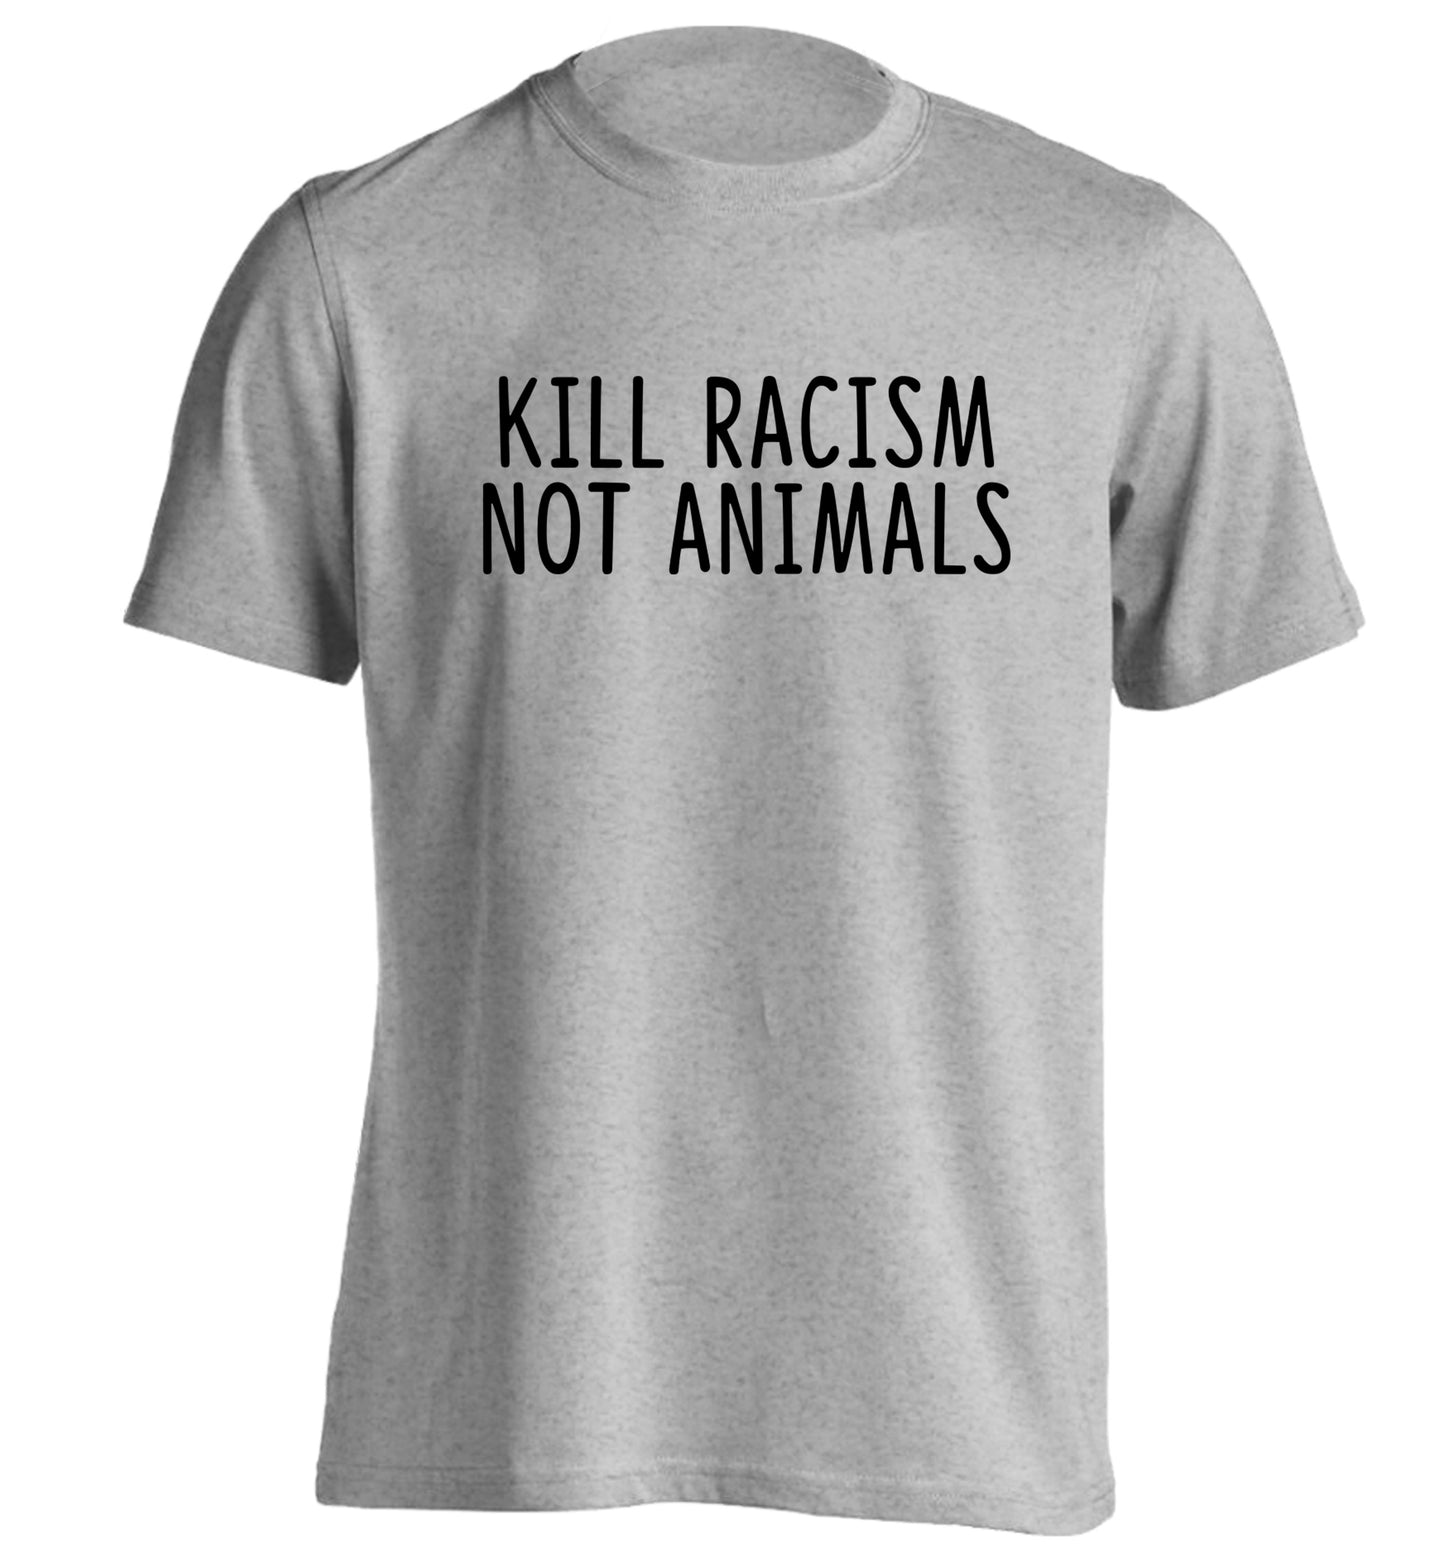 Kill Racism Not Animals adults unisex grey Tshirt 2XL